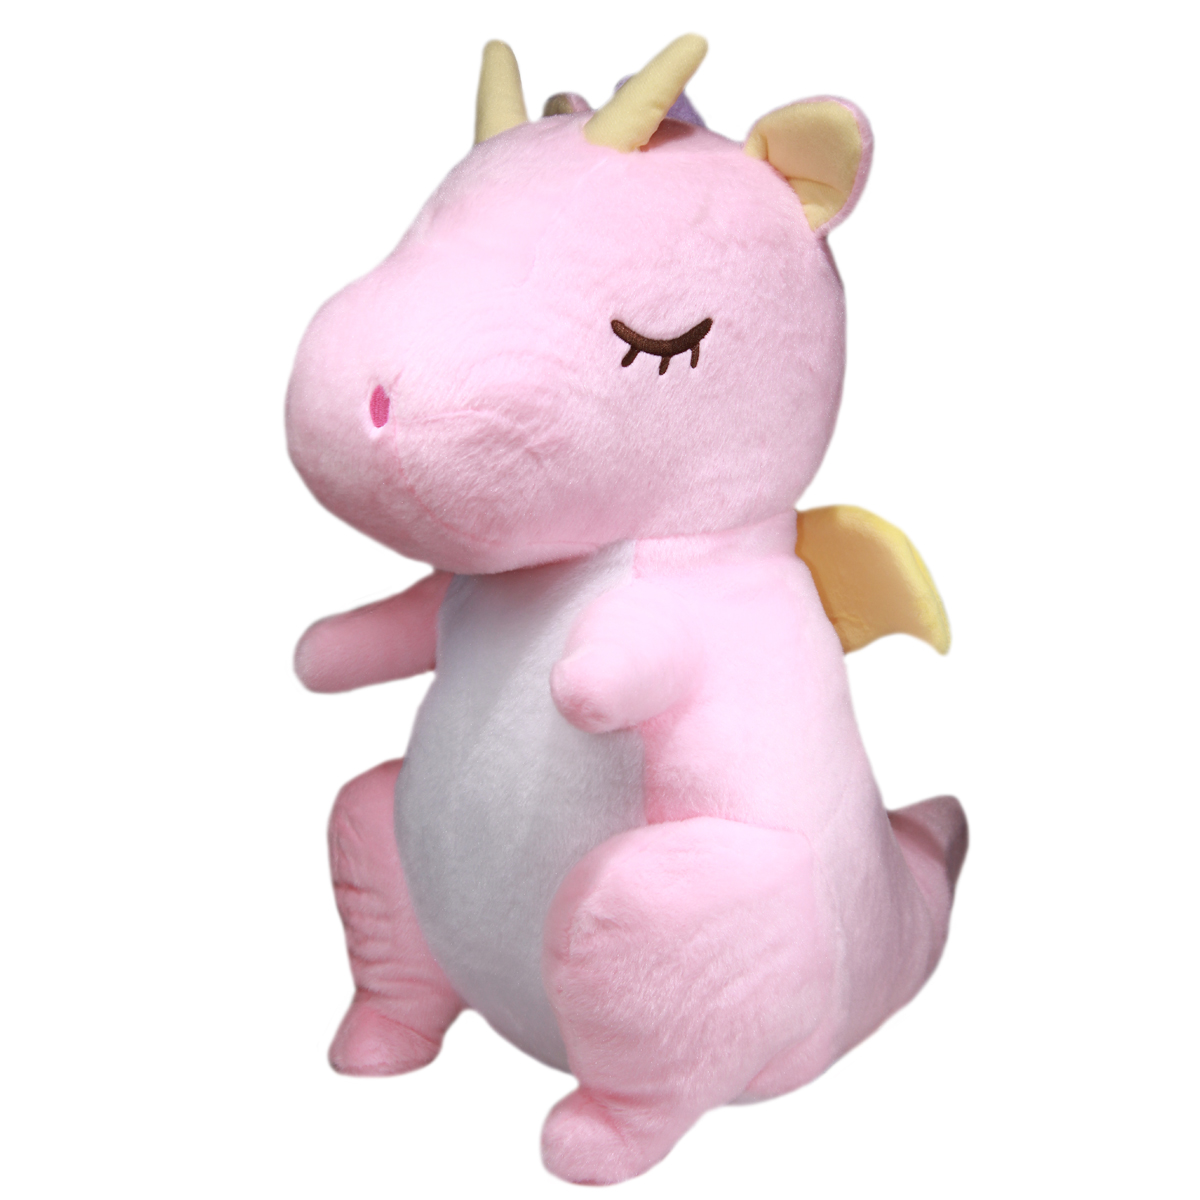 Fantasy Dragon Plushie Soft Stuffed Animal Toy Pink BIG Size 18 Inches